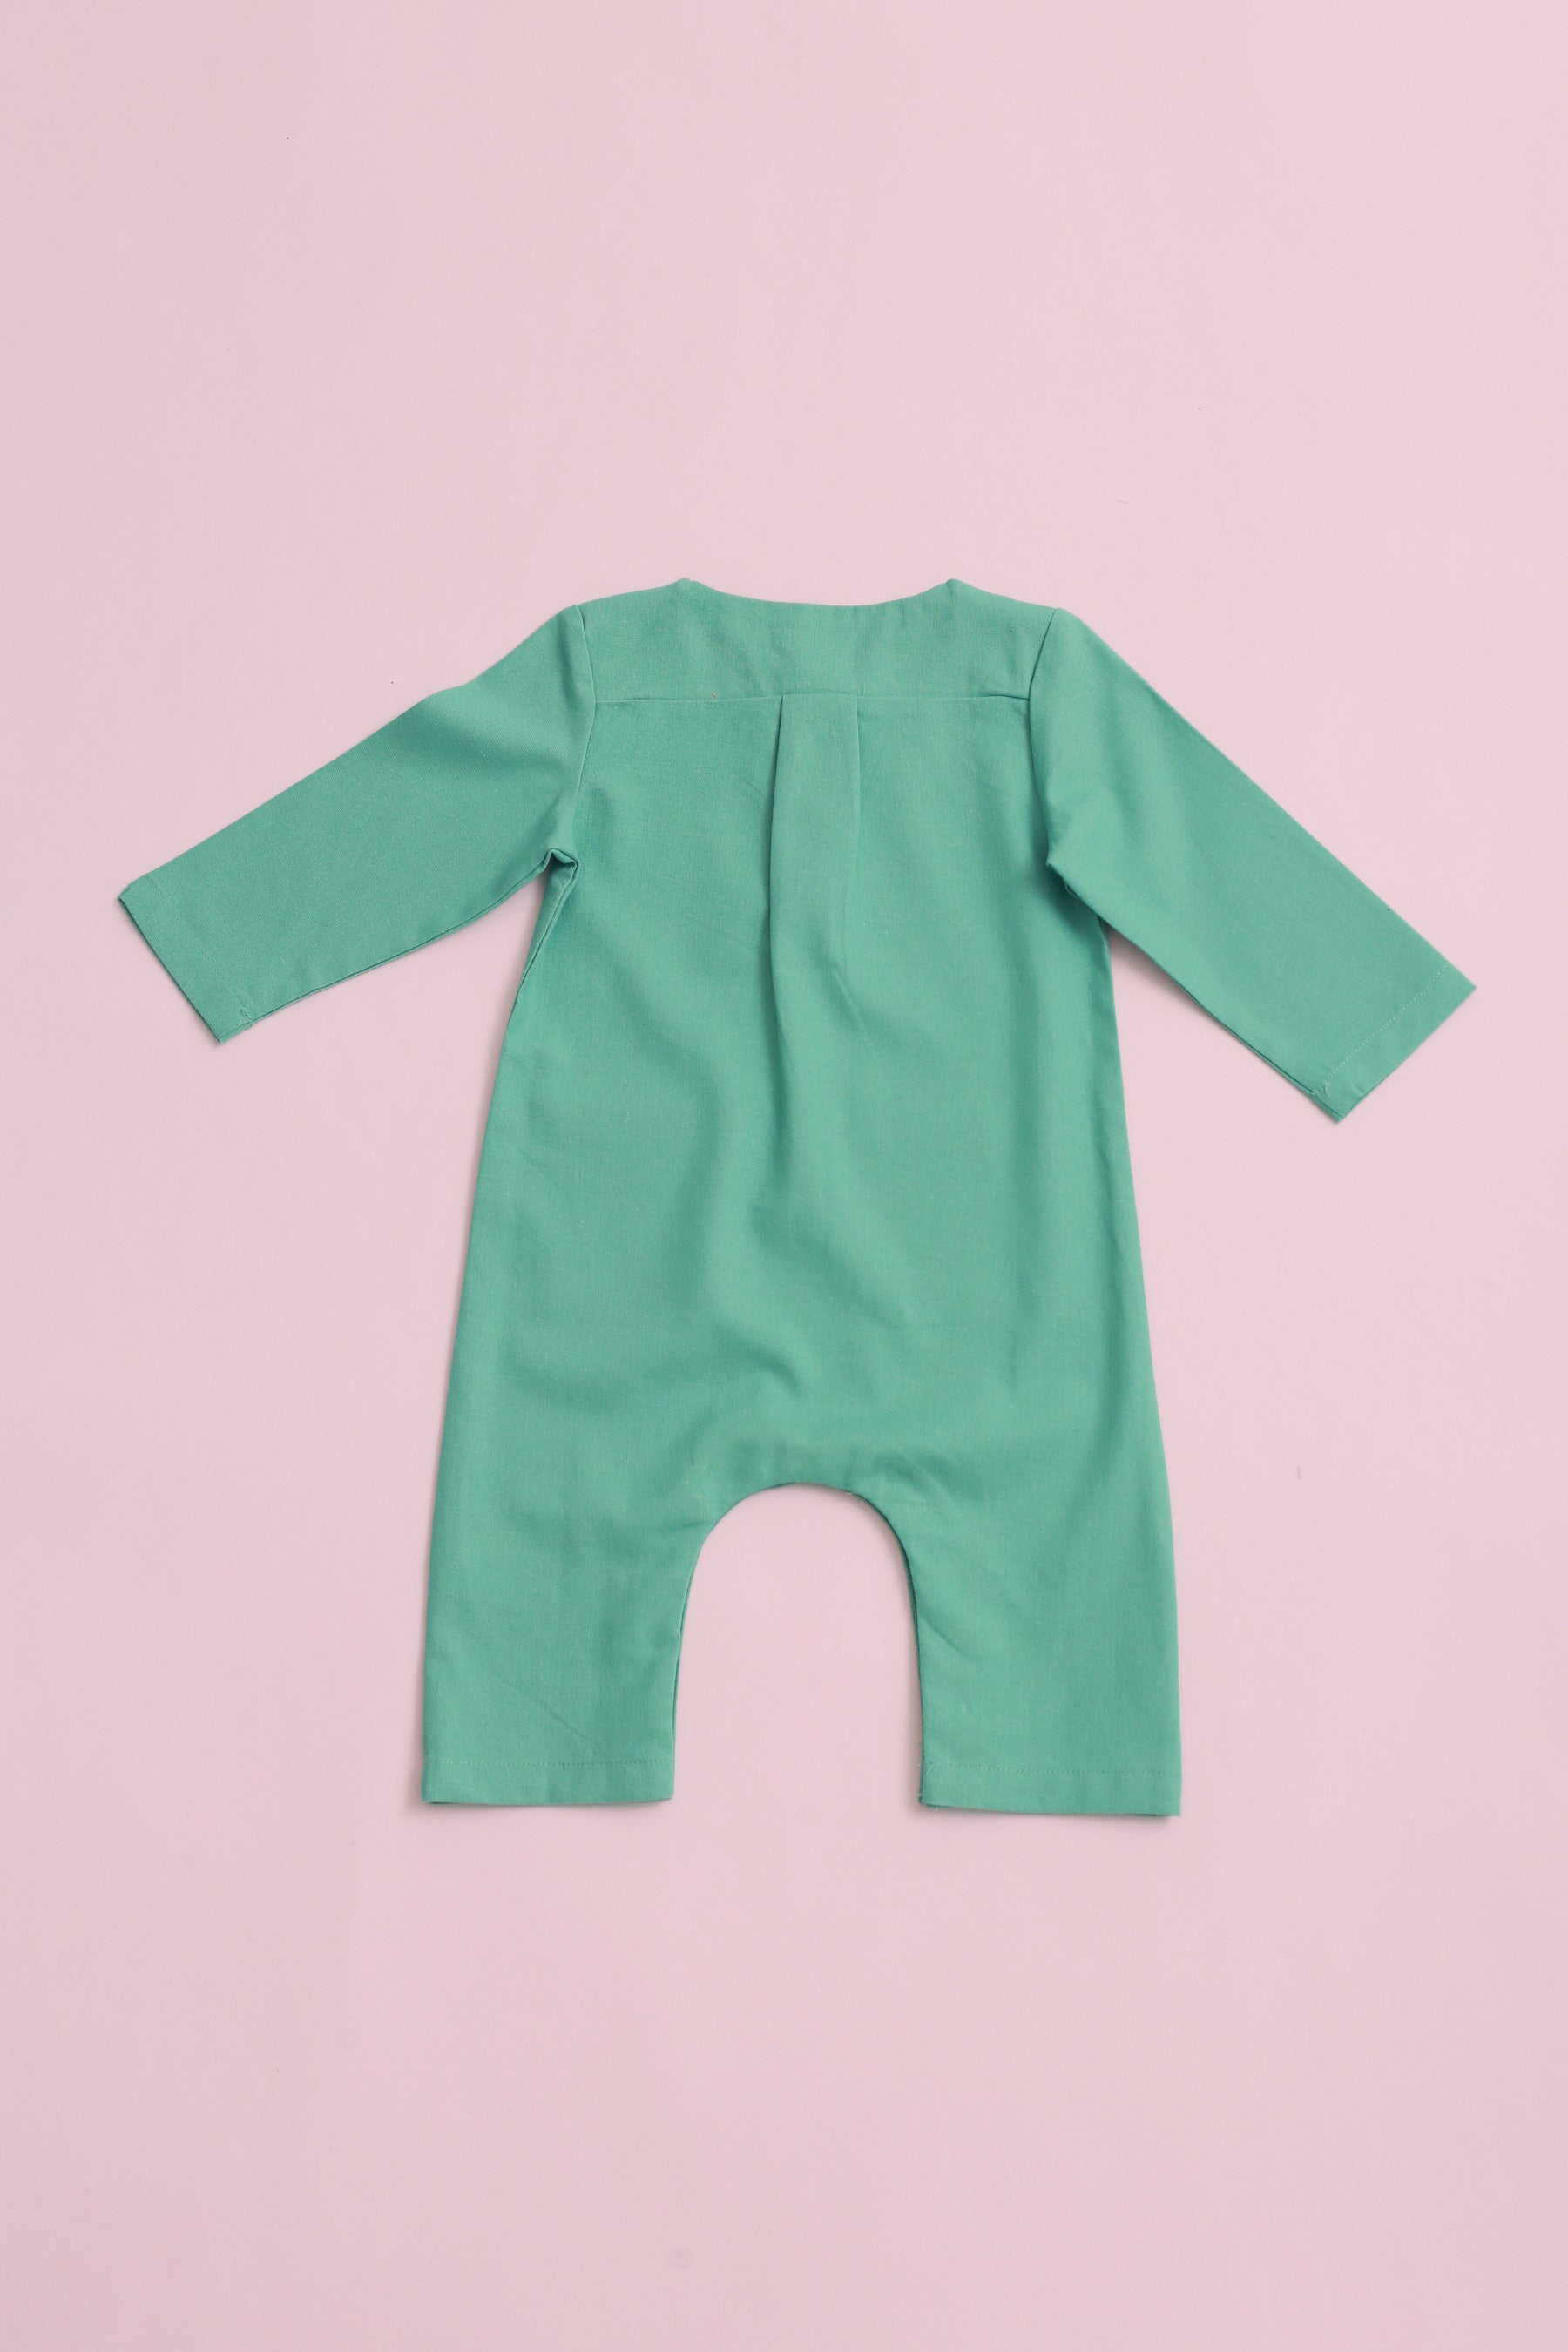 one piece baby rompers long sleeve button eid raya kenduri event wear 